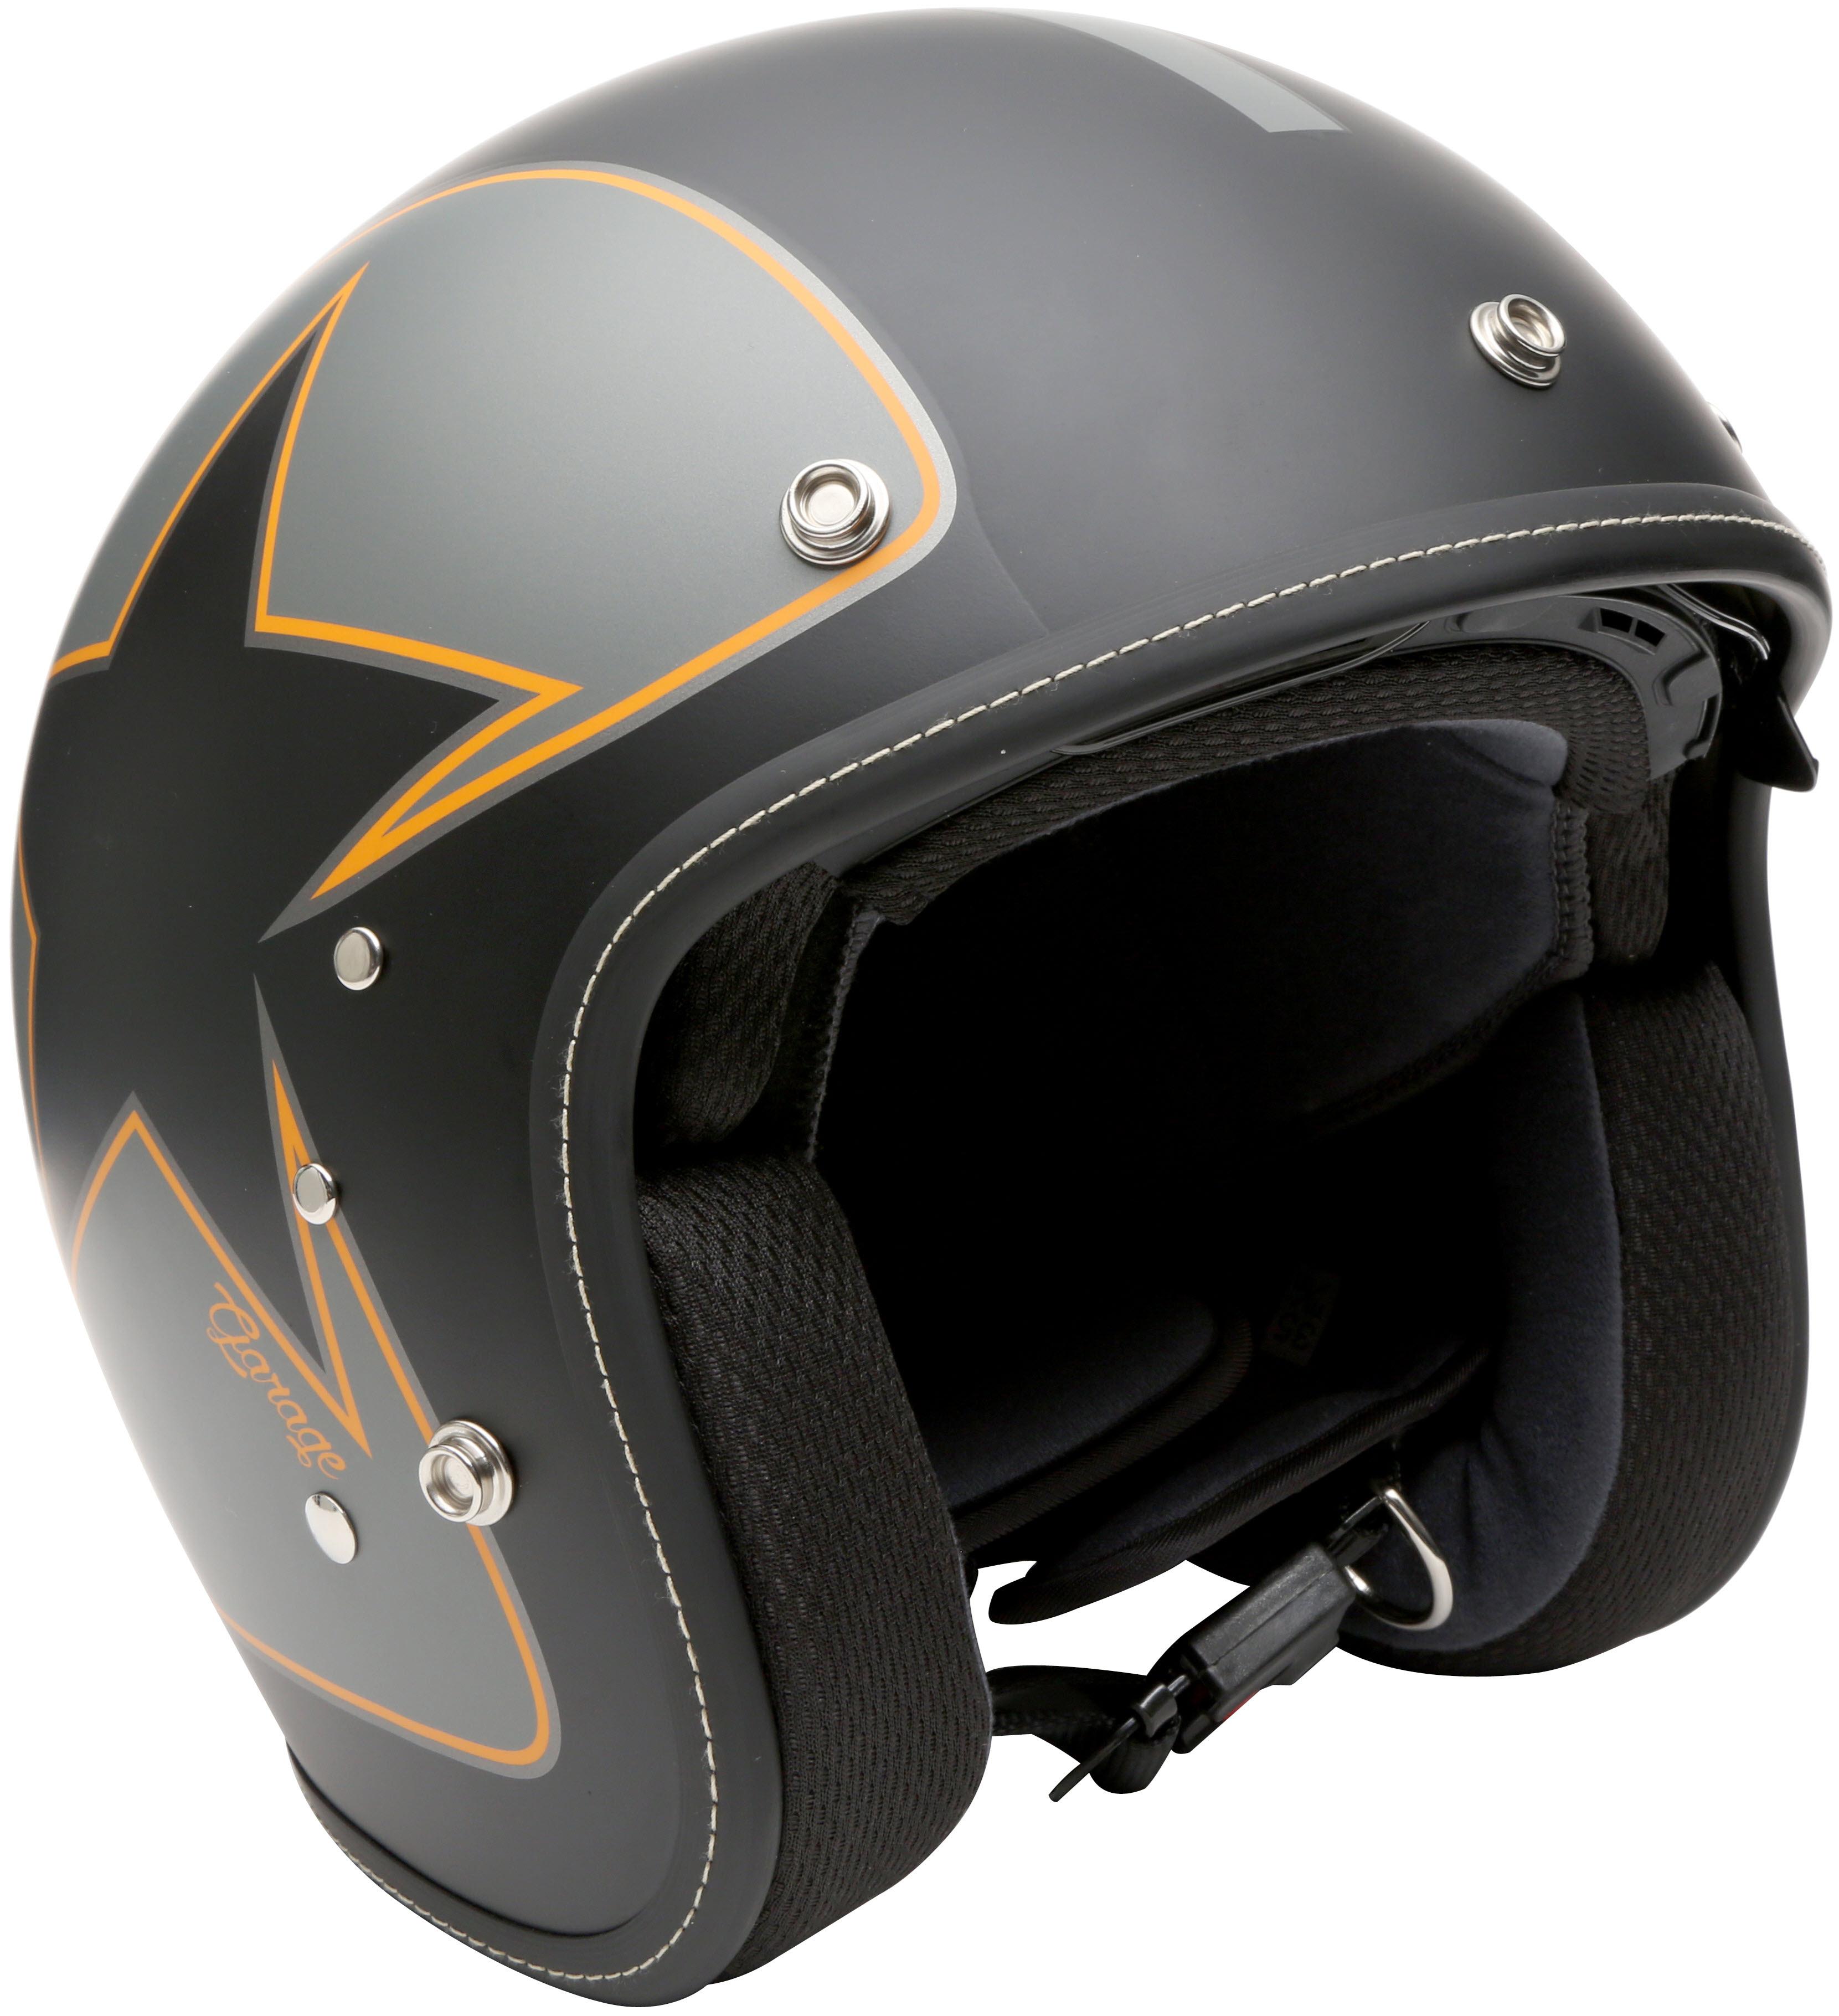 Duchinni Open Face Motorcycle Helmet - Matt Black/Orange, Medium